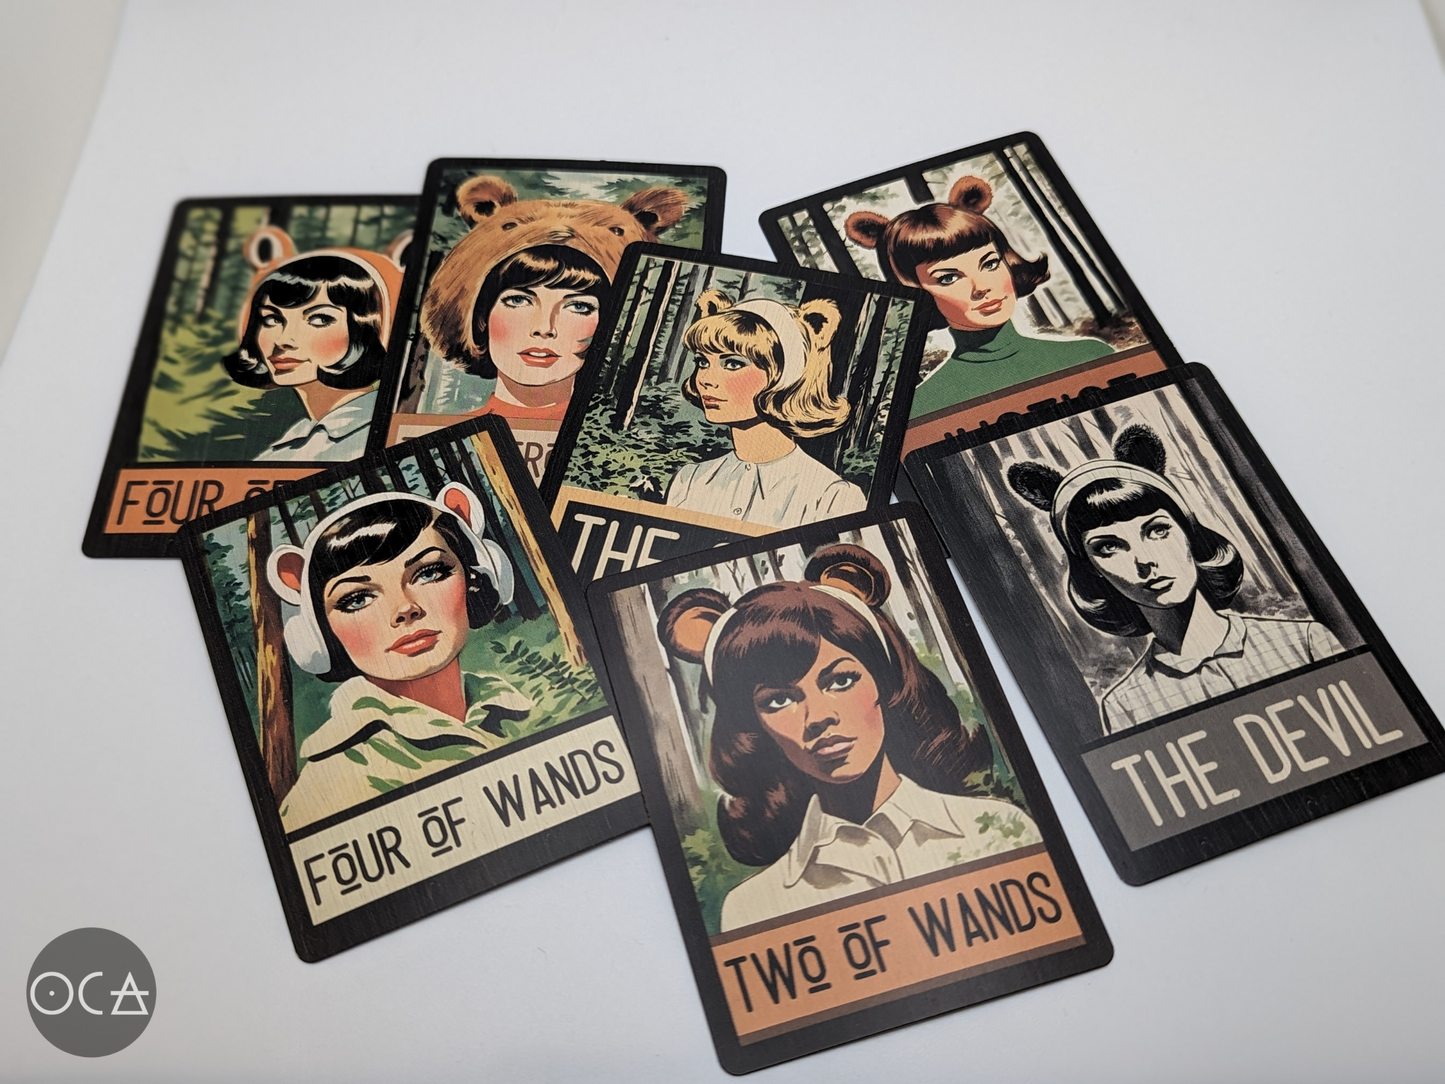 Mamabear Tarot Cards Gift Set (Pre-order) Original Retro/Vintage Design